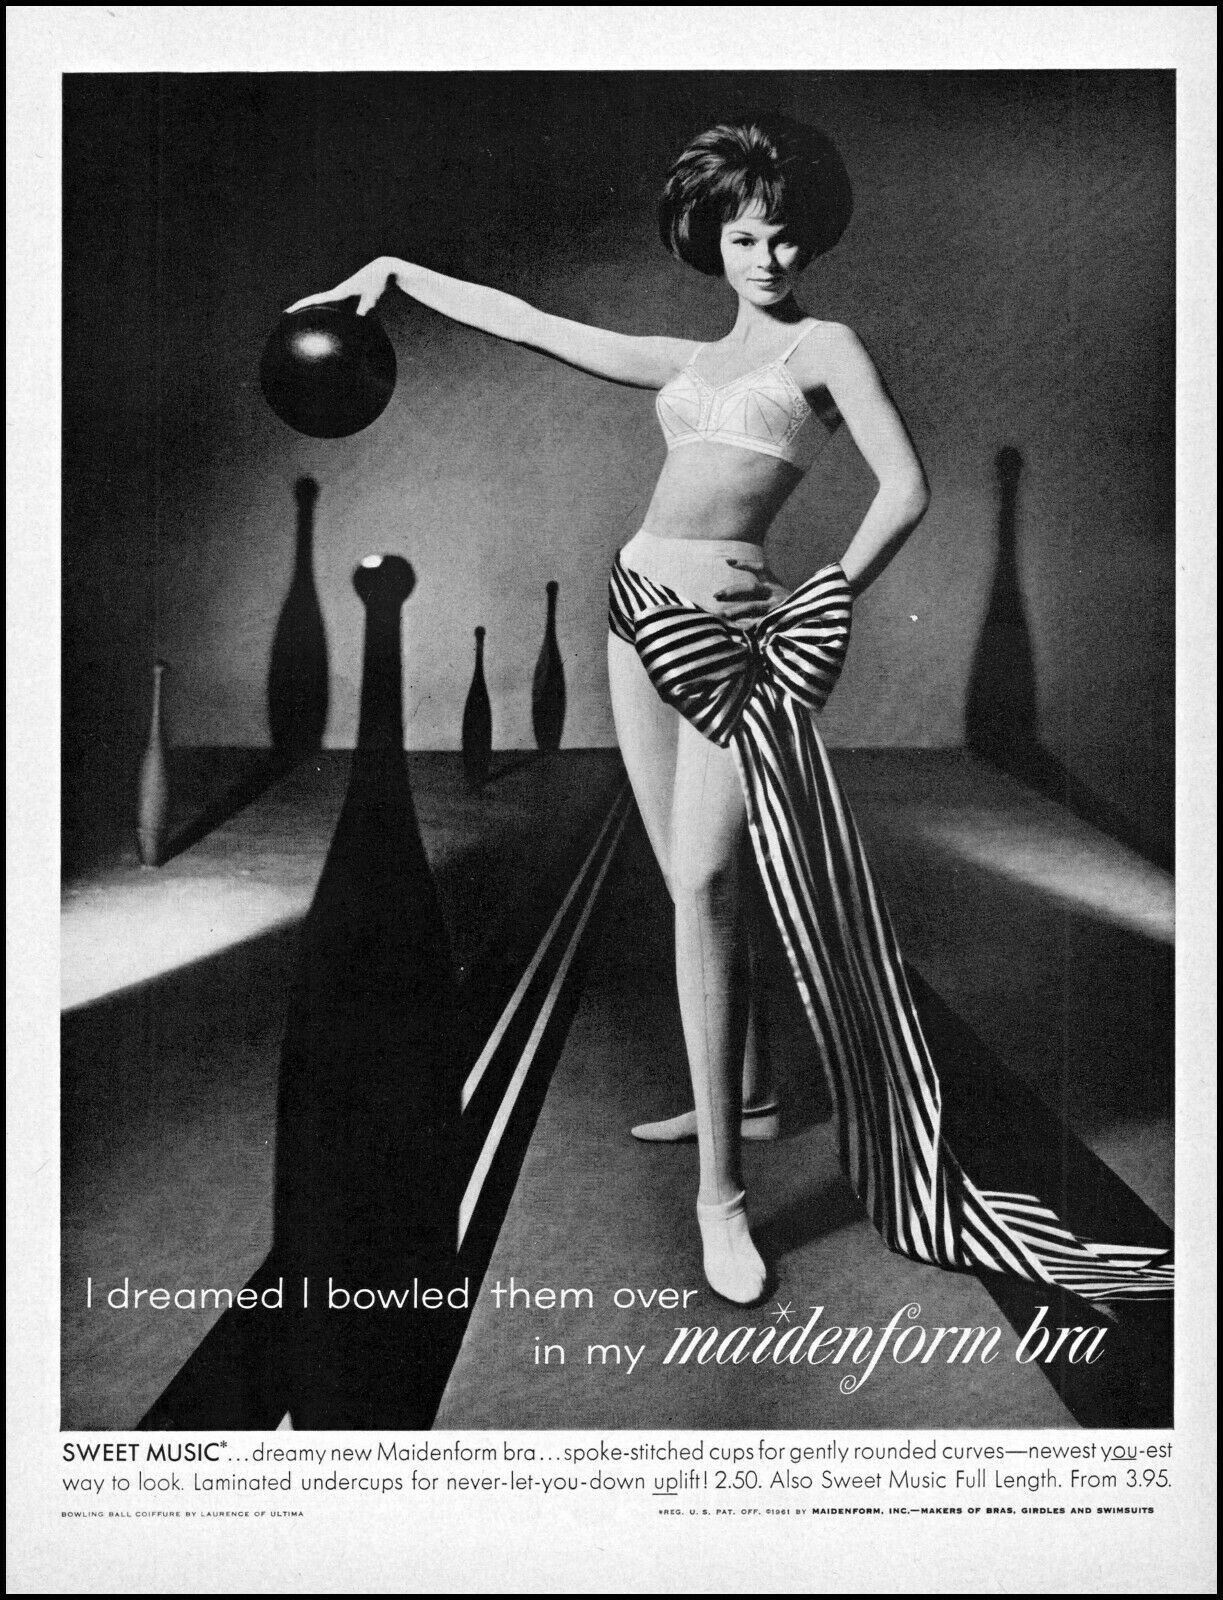 Maidenform I dreamed I bowled them over in my Maidenform bra 1961 Adland®